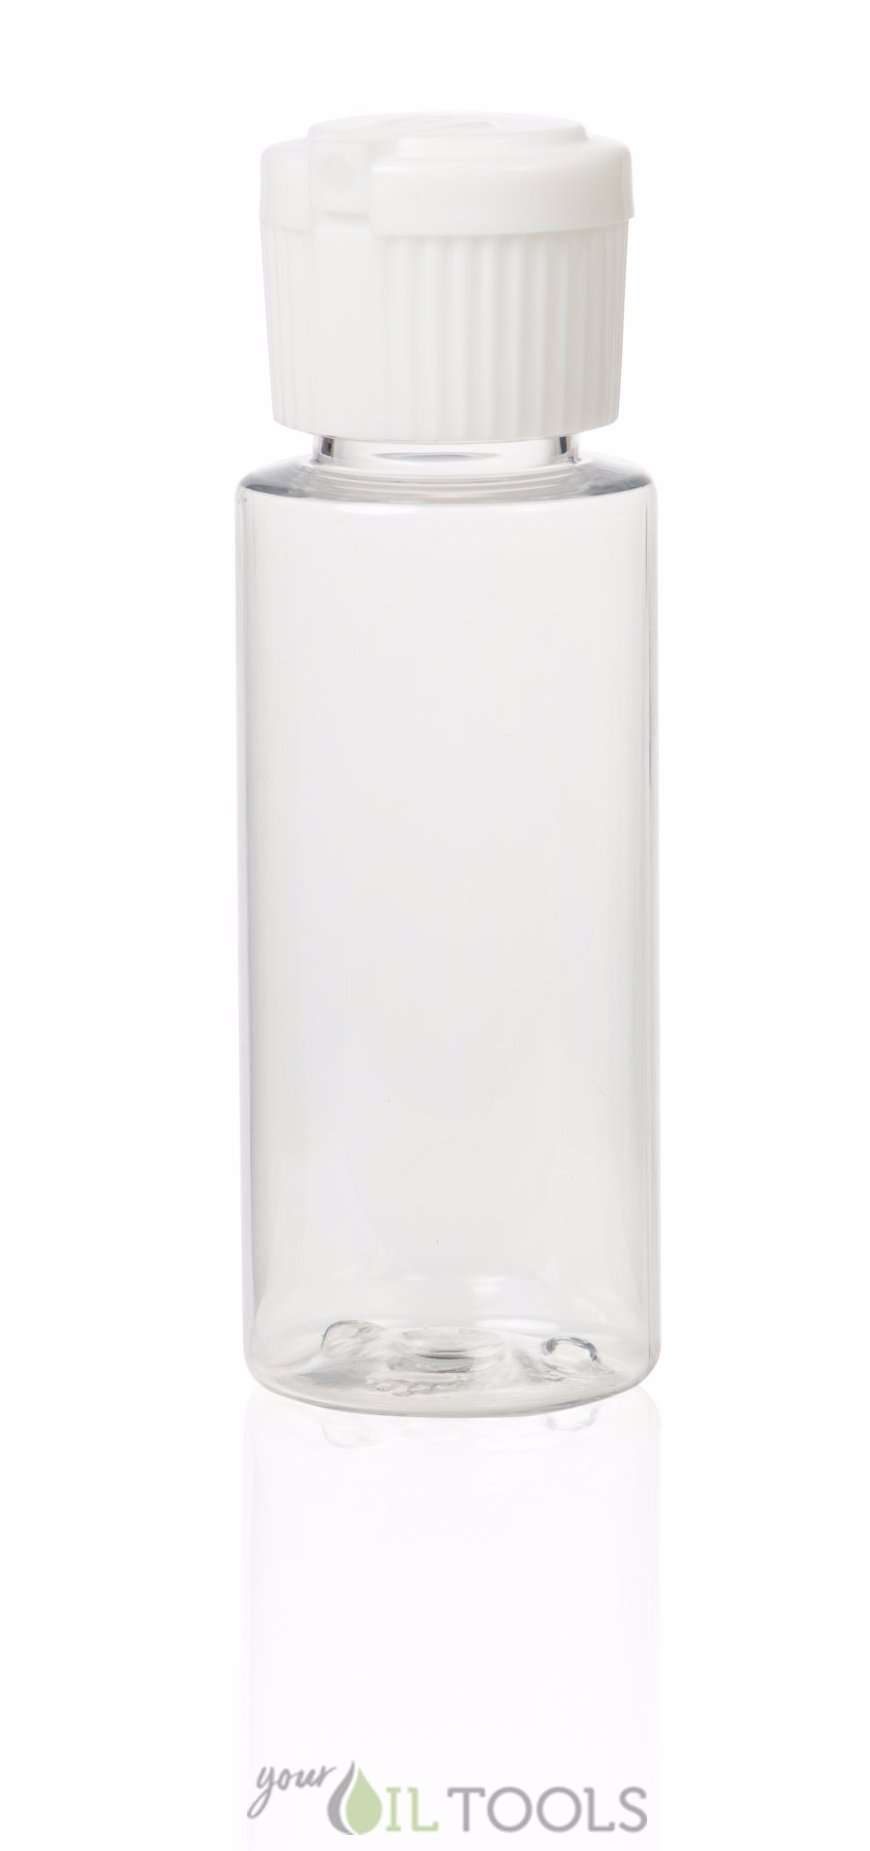 1 oz Clear PET Plastic Cosmo Bottle w/ White Flip Top Plastic Treatment Bottles Your Oil Tools 